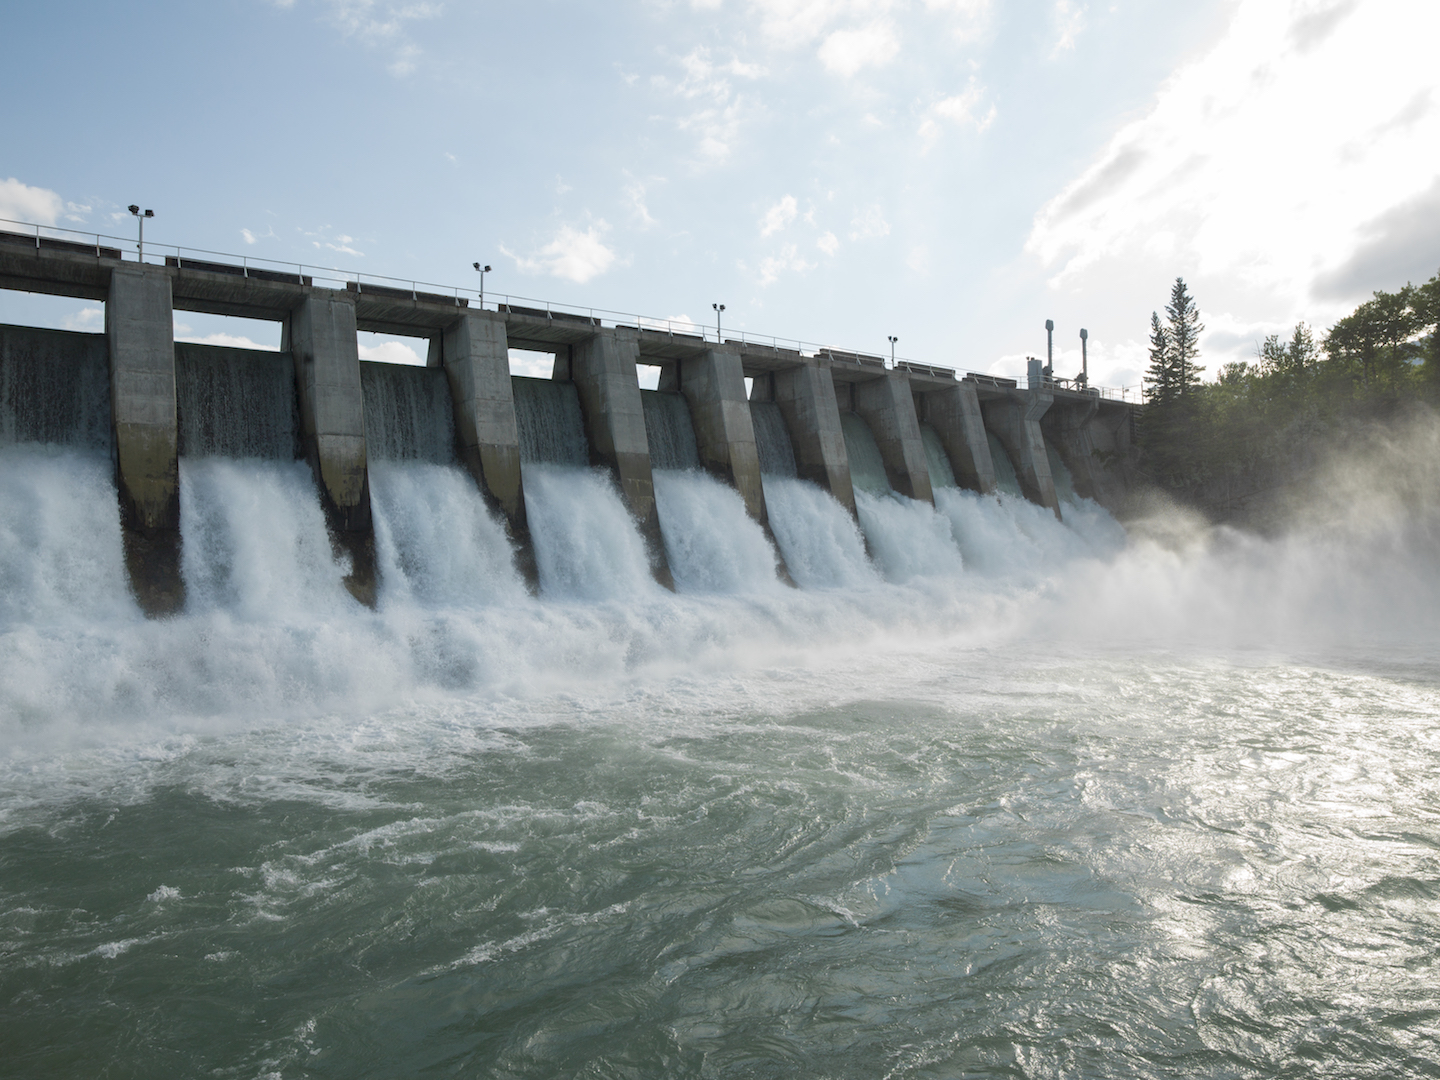 A hydropower dam releasing water.